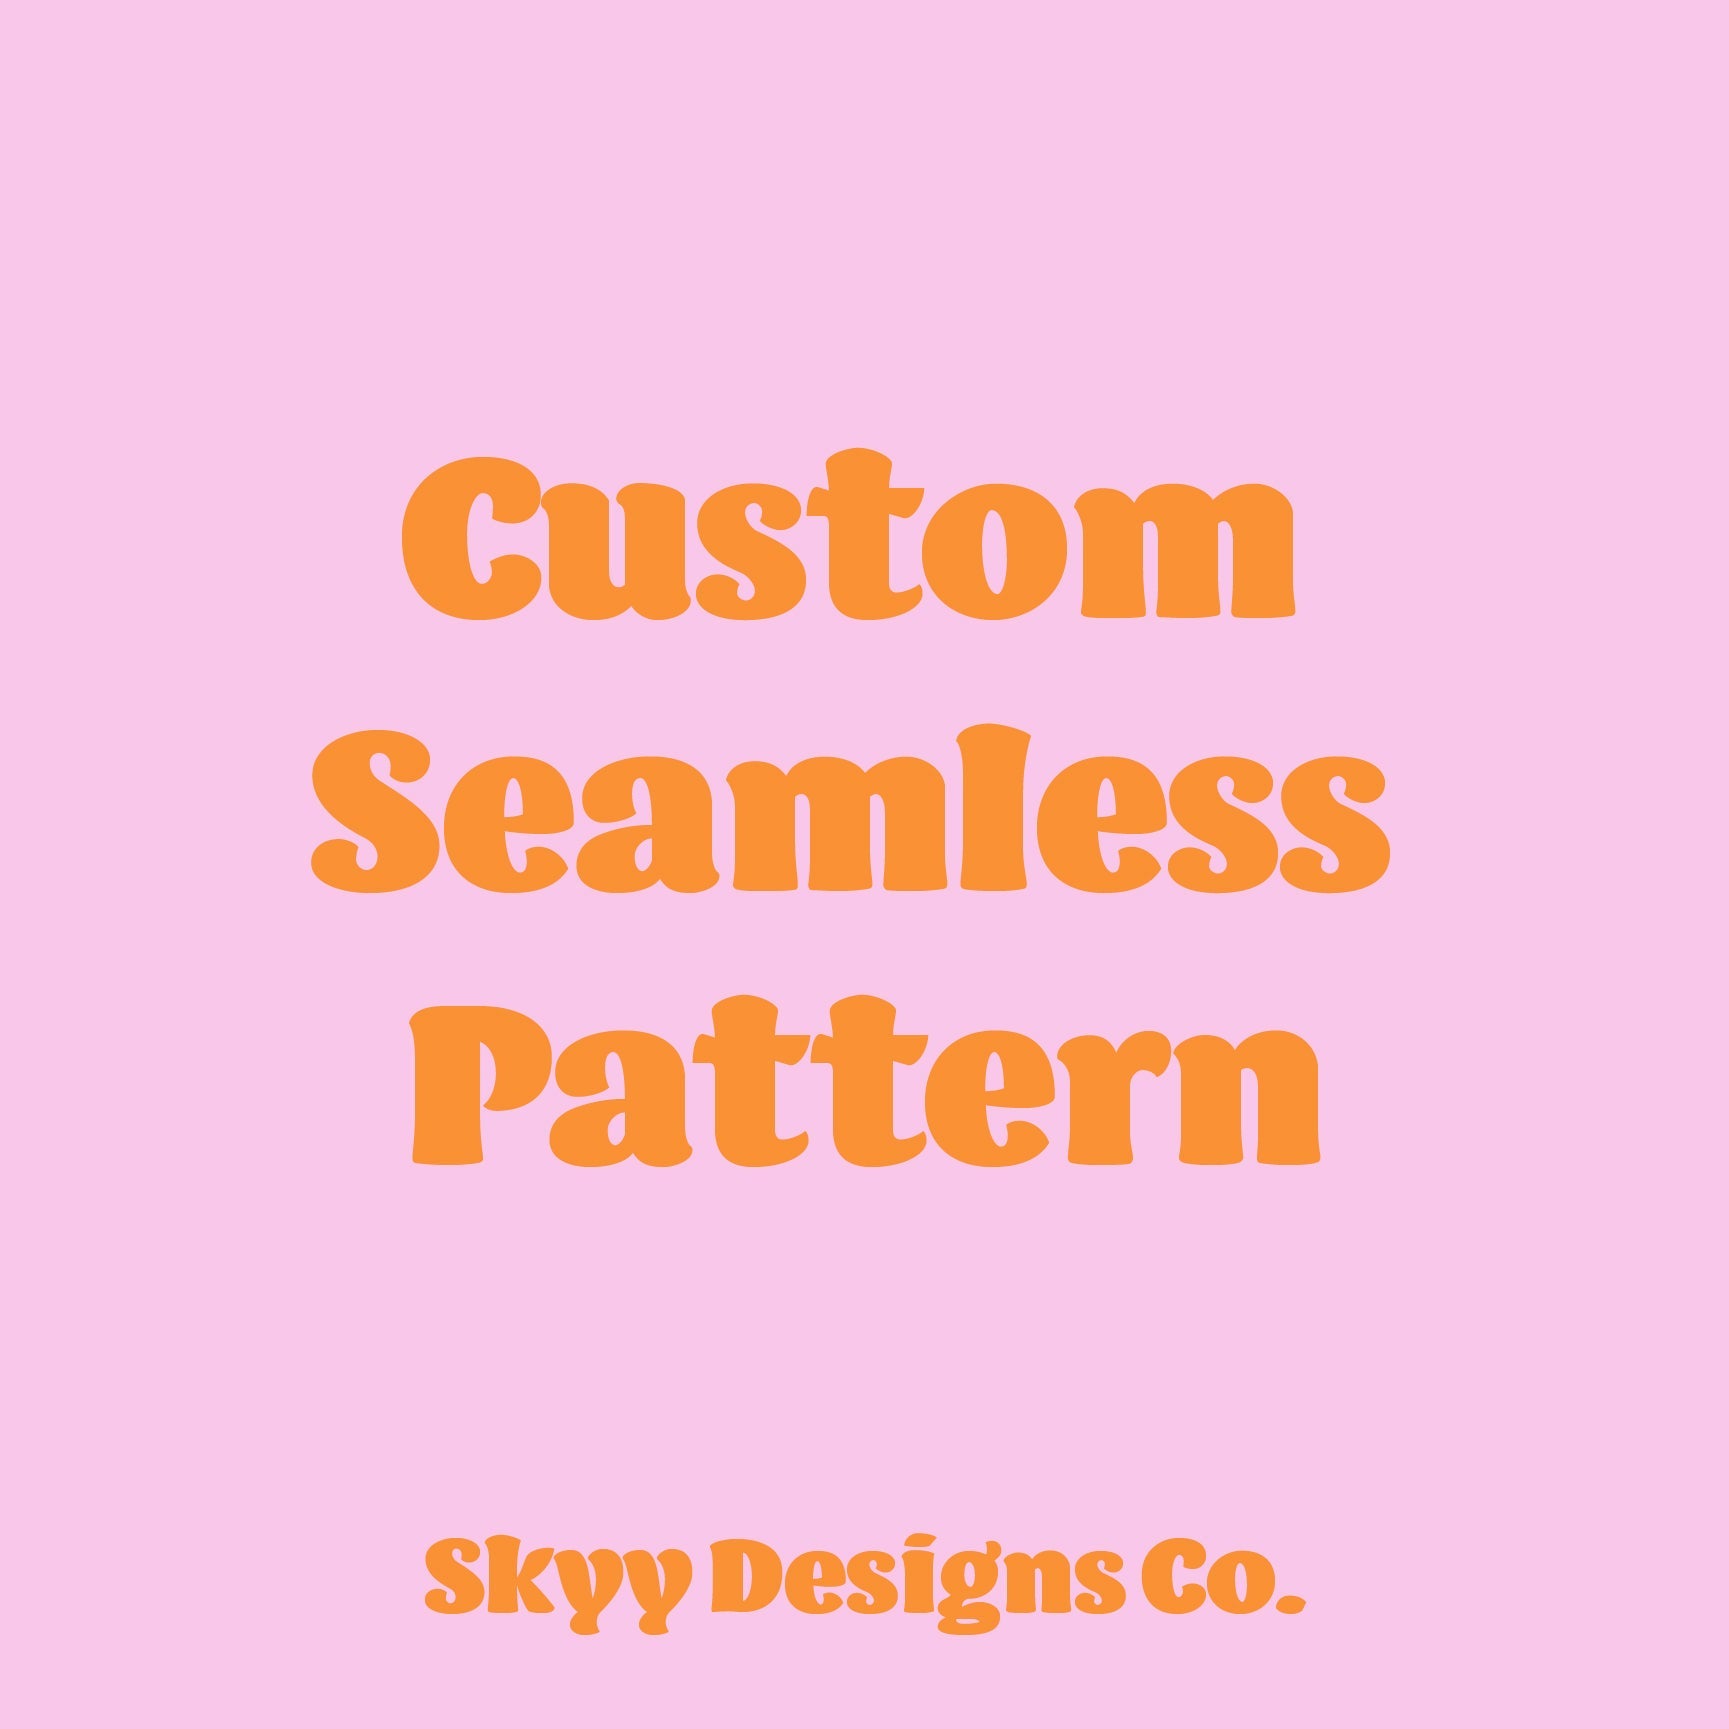 Custom Seamless Pattern Design By Skyy Designs Co. - SkyyDesignsCo | Seamless Pattern Designs